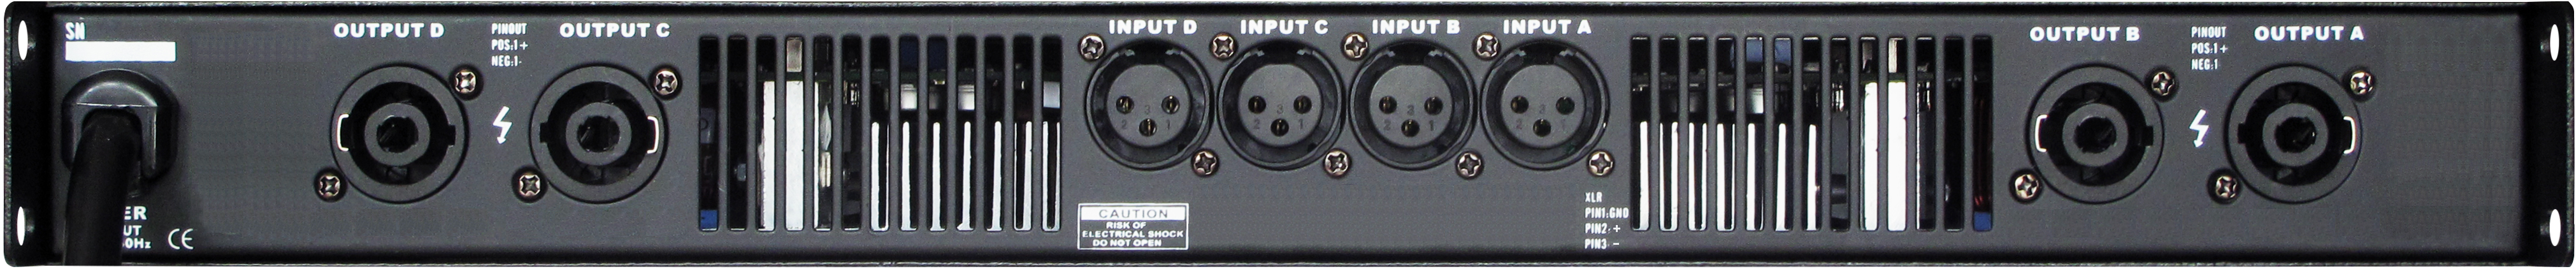 Verstärker M100Q-DSP - GISEN Audio B-Ware